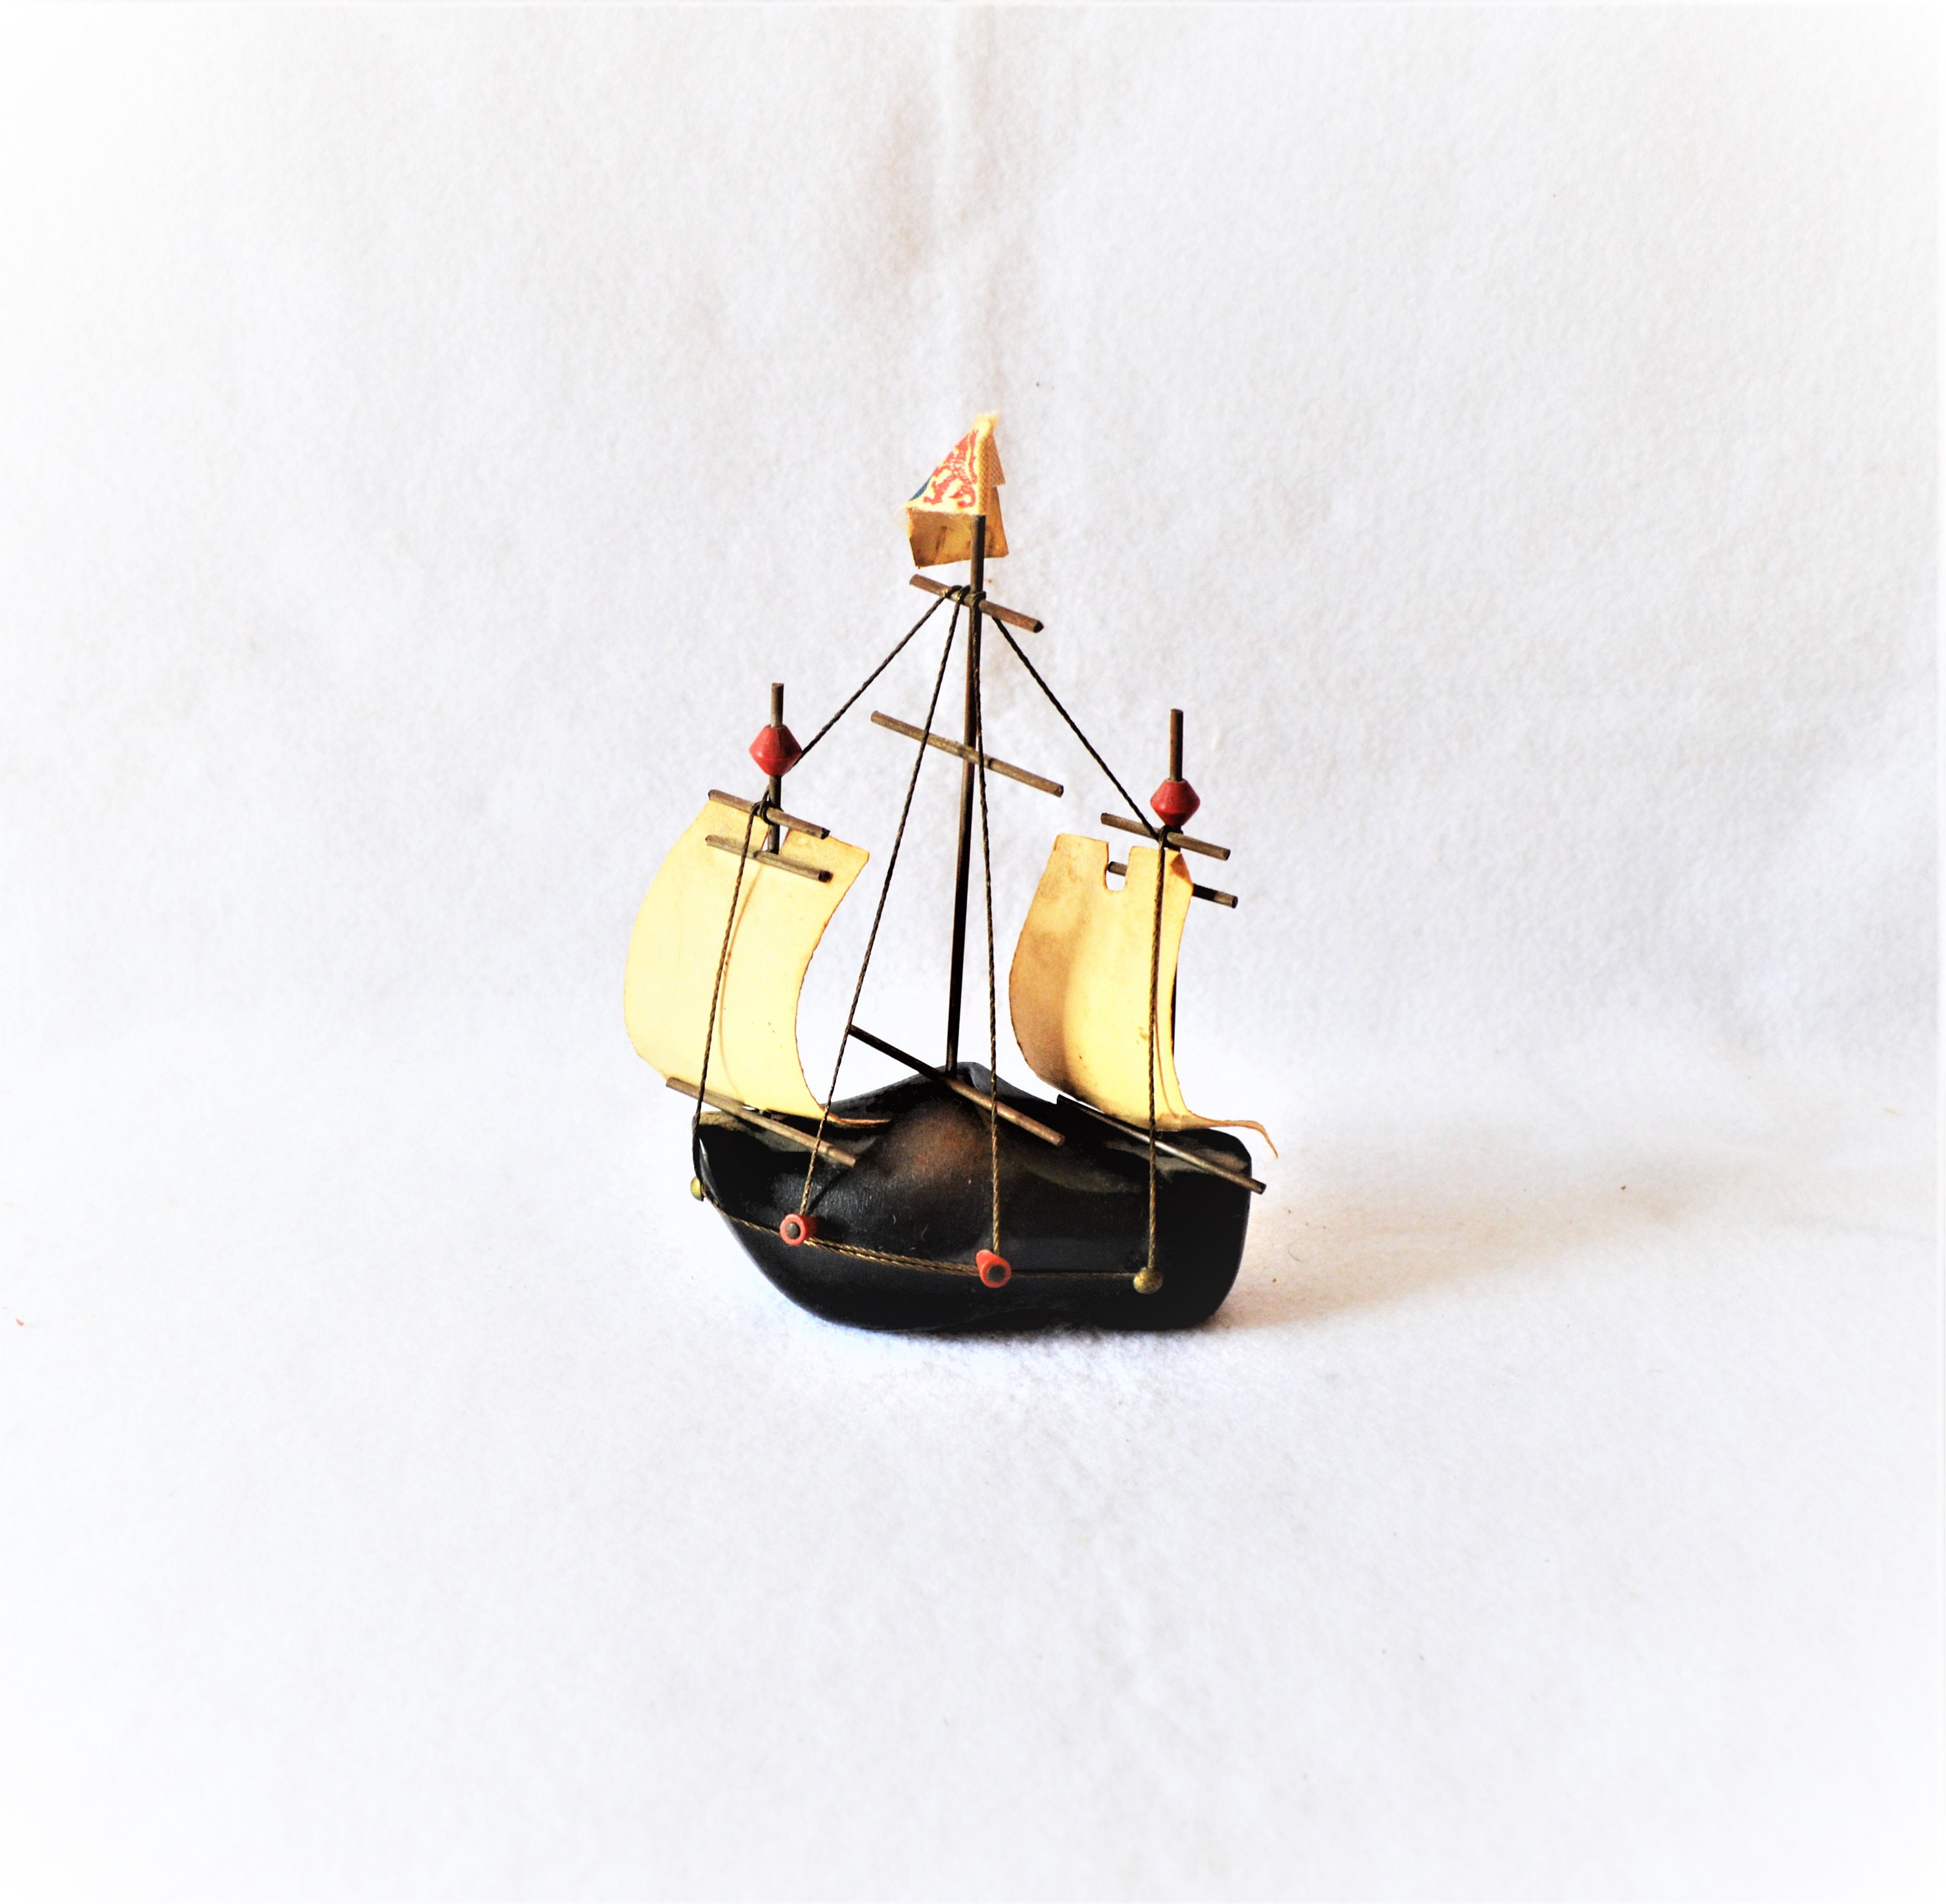 Pirate Ship Figurine 